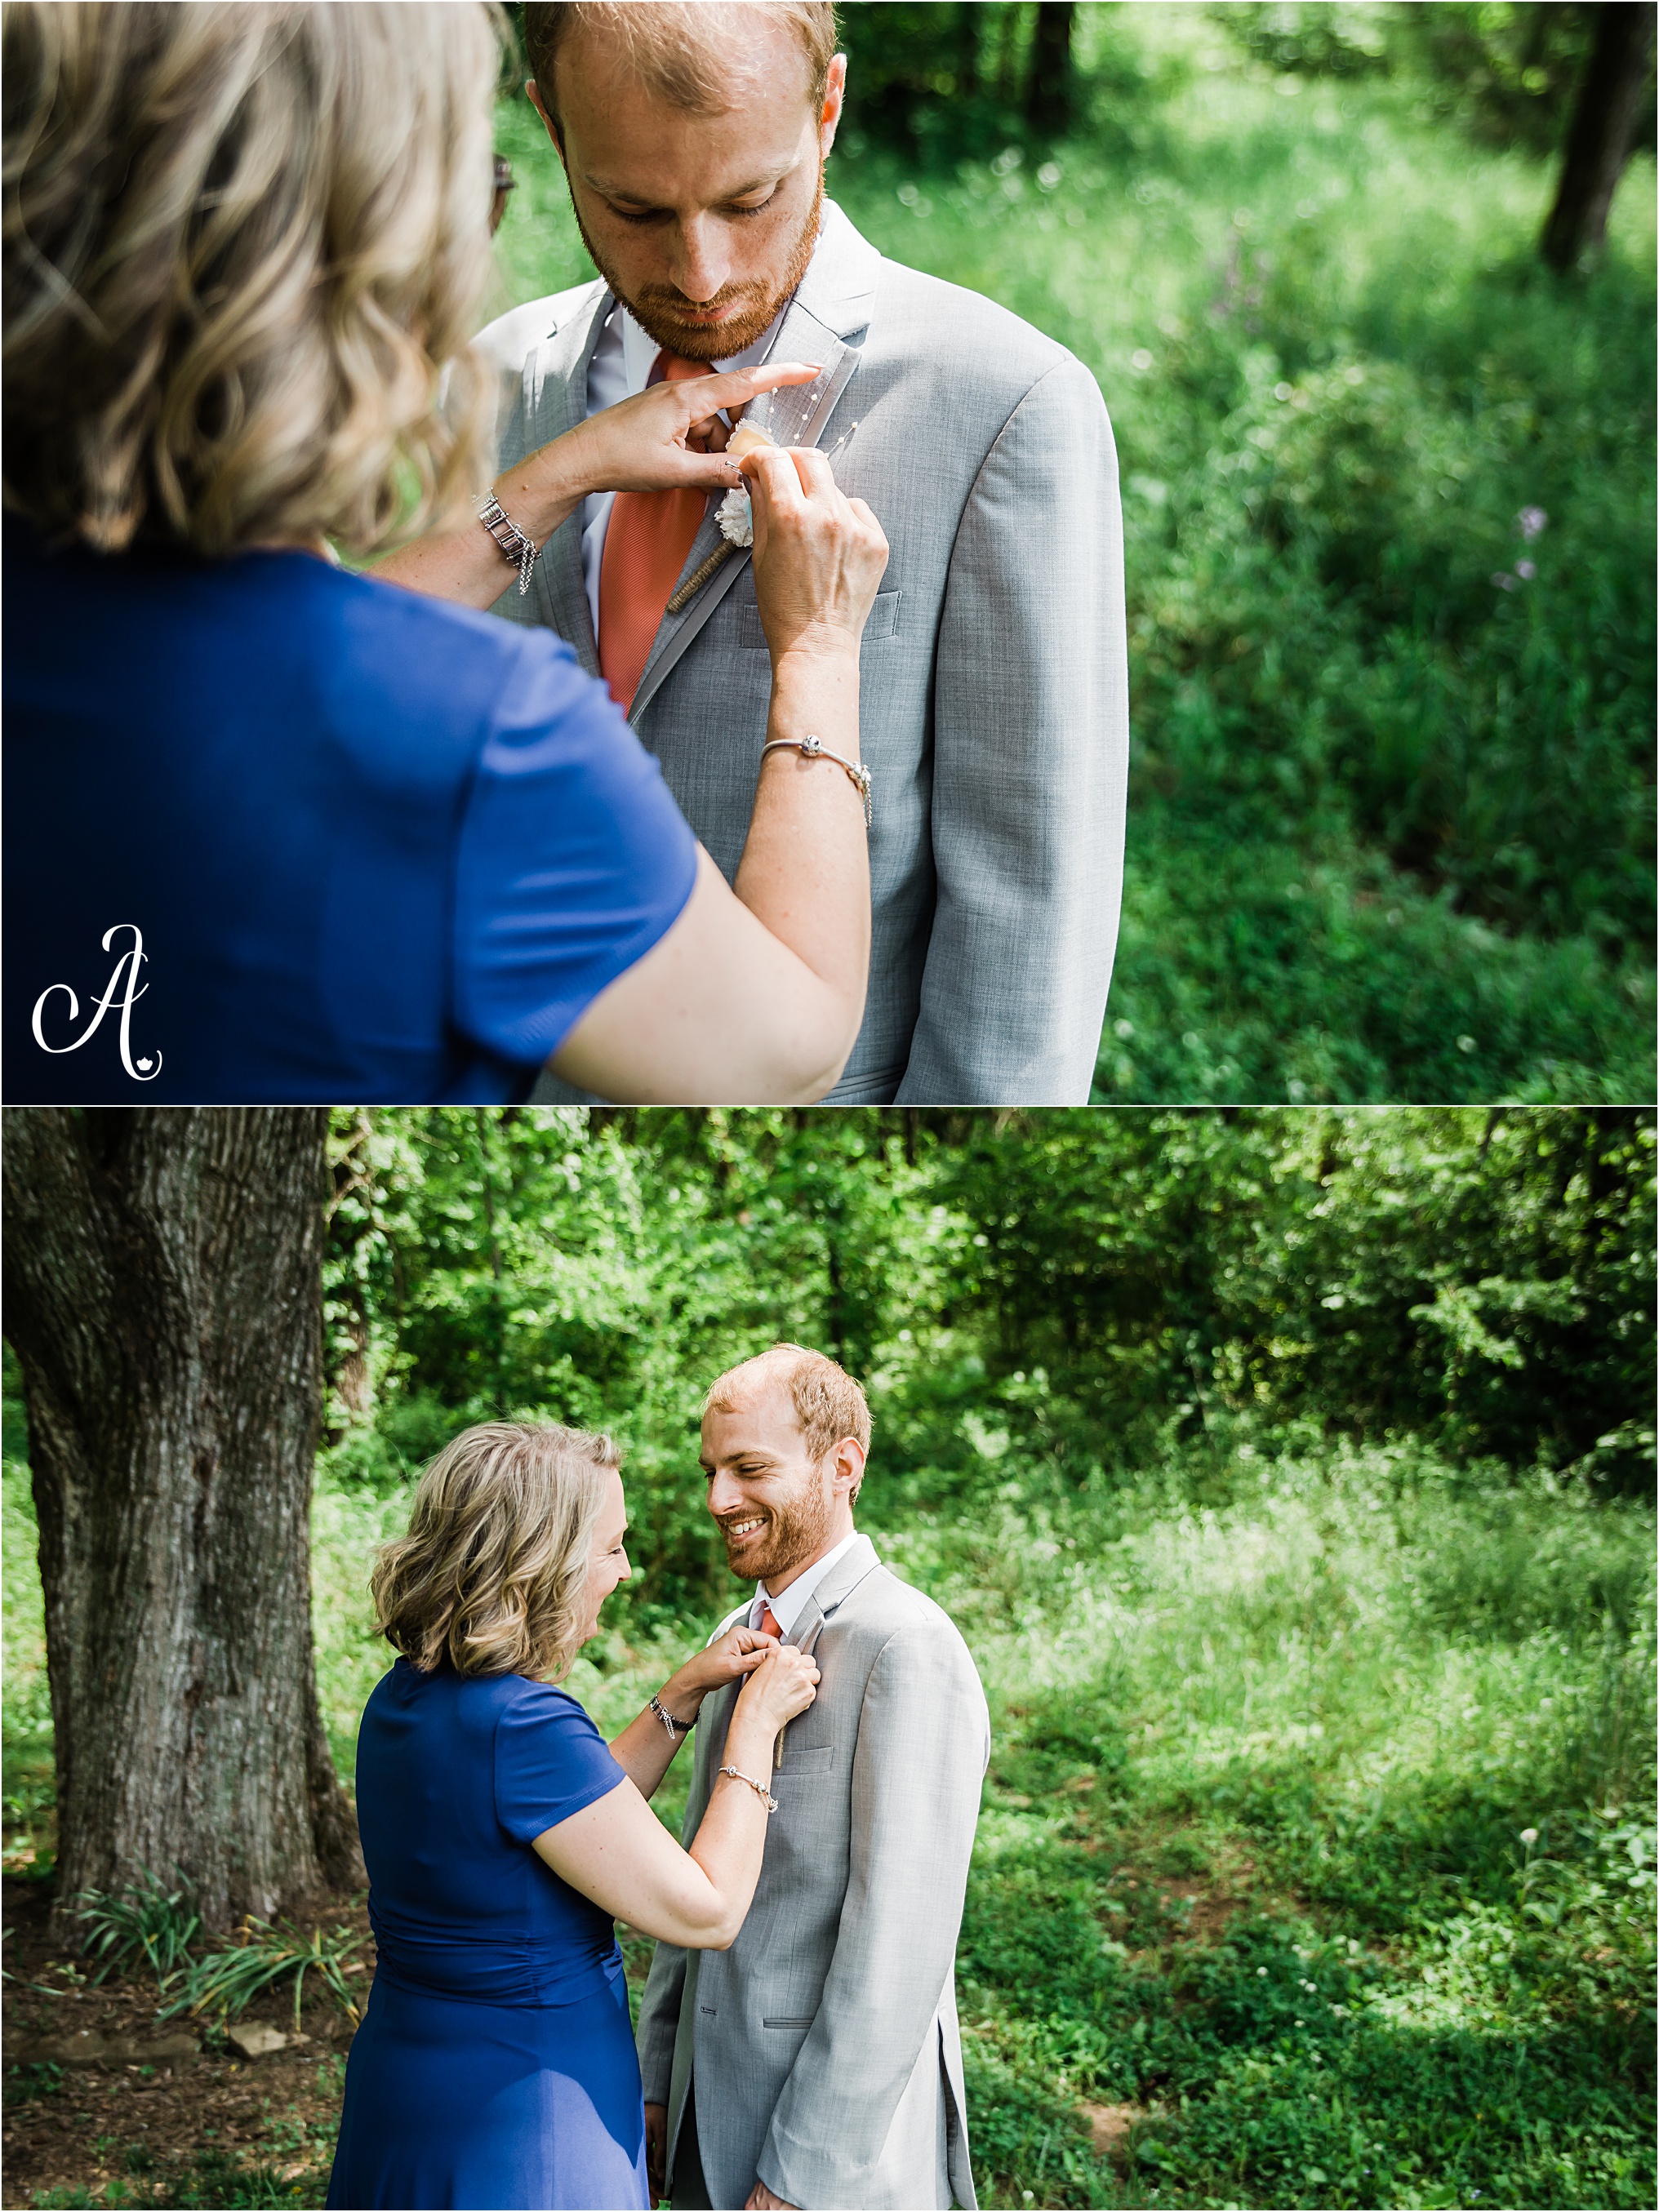 Amber Lowe Photo,Knoxville Wedding Photographer,Madison Creek Farms,Nashville Photographer,Nashville Wedding Photographer,Photographer,Your Wedding by Lauren,